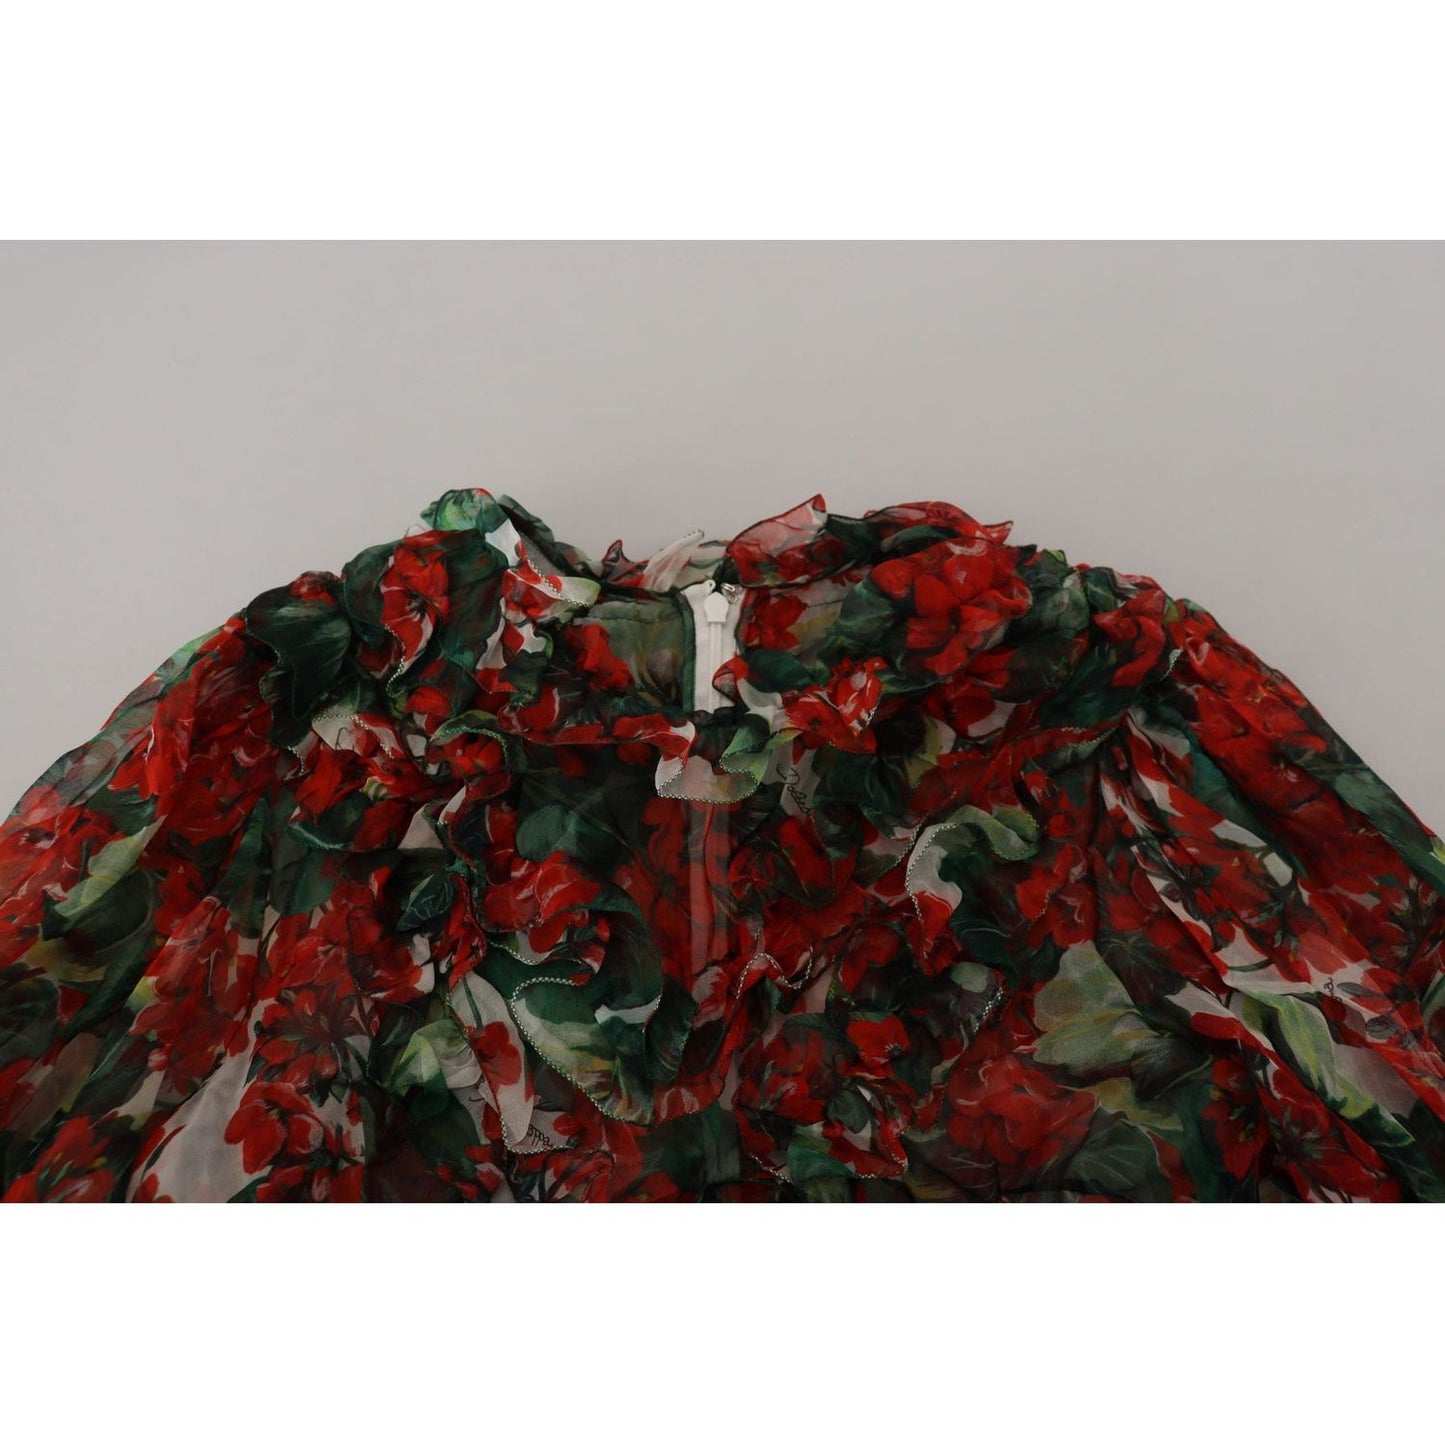 Dolce & Gabbana Elegant Multicolor A-Line Silk Dress multicolor-geranium-a-line-knee-length-dress